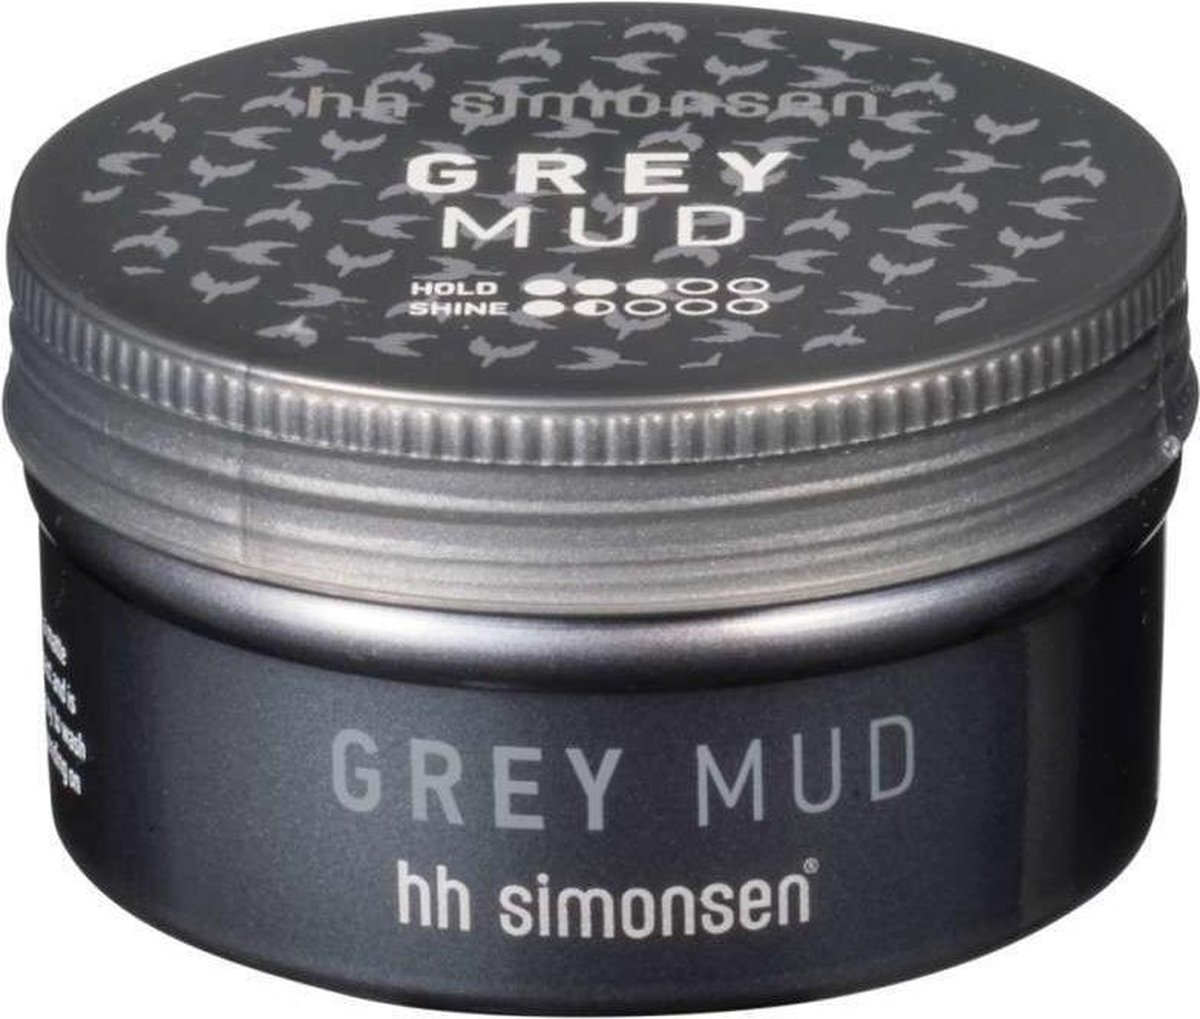 HH Simonsen Grey Mud haarwax 100 ml